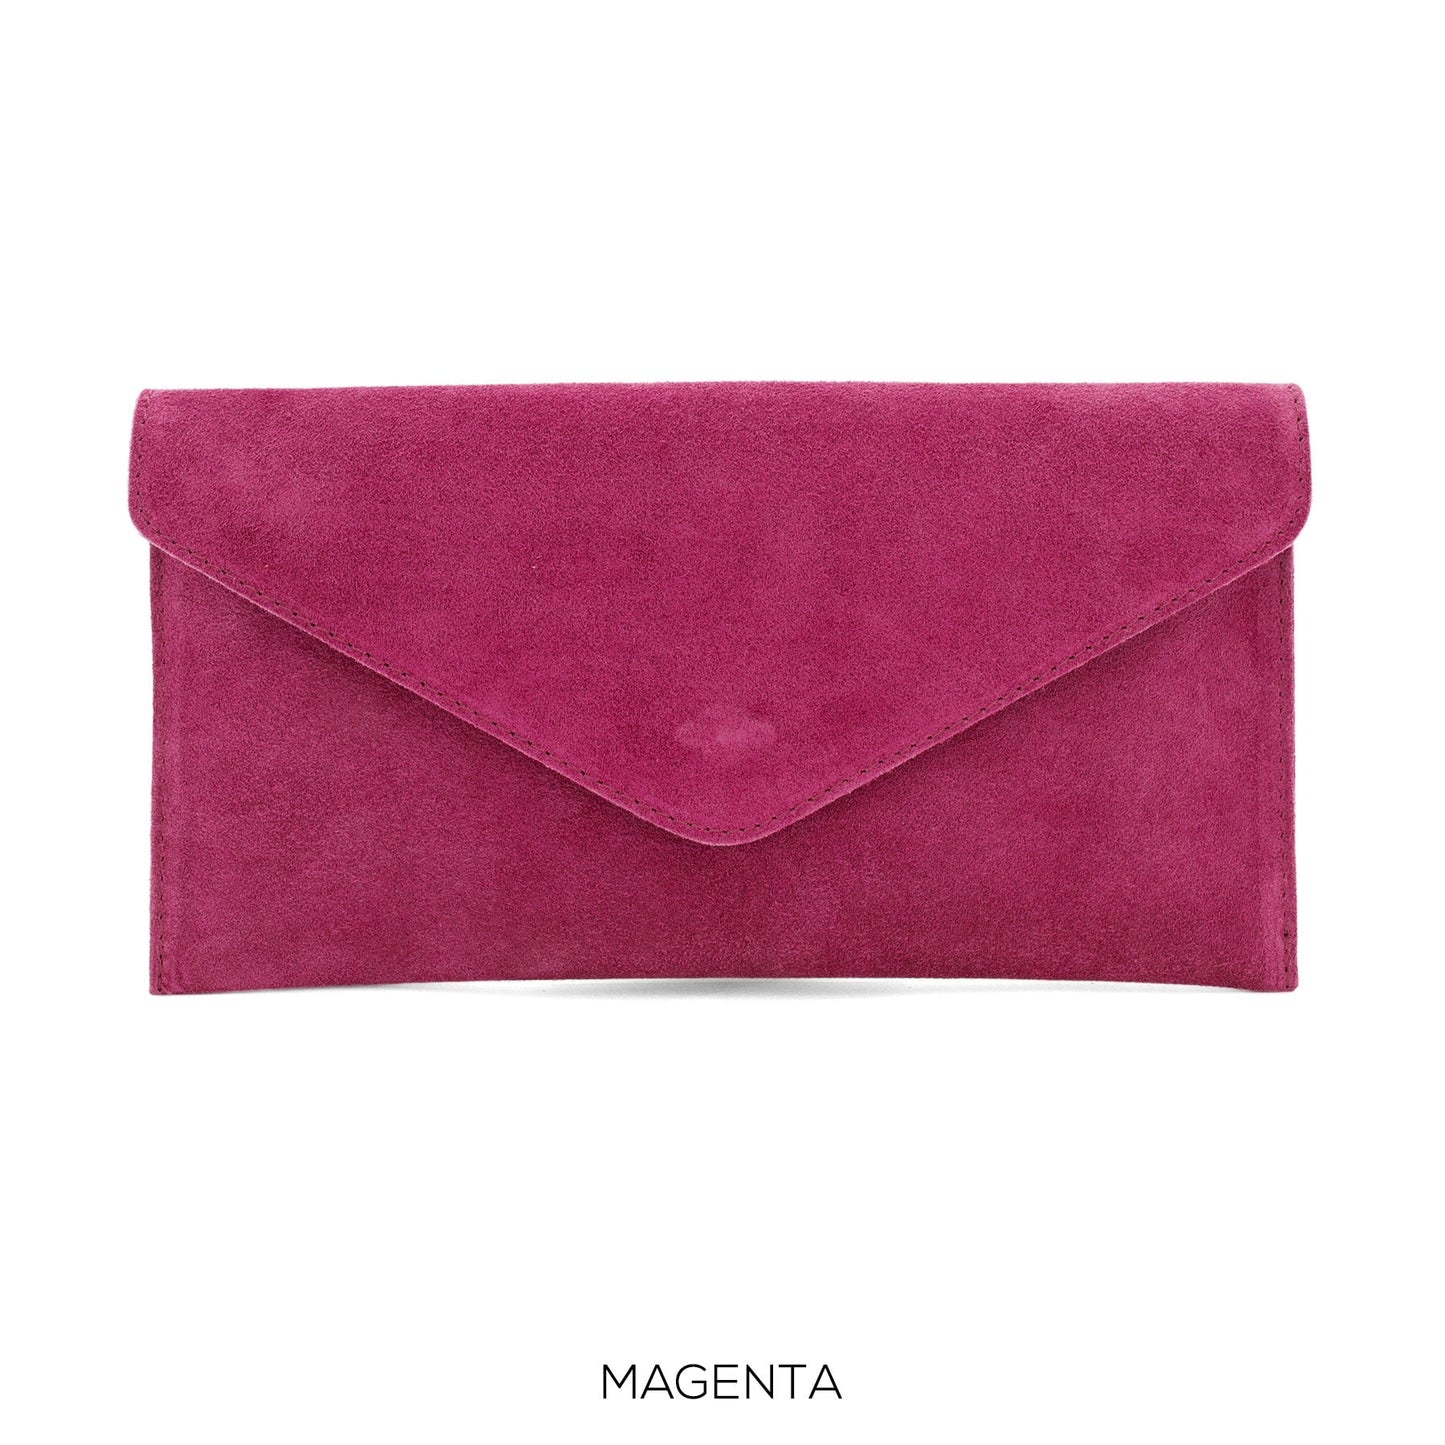 Magenta Fuchsia envelope clutch bag